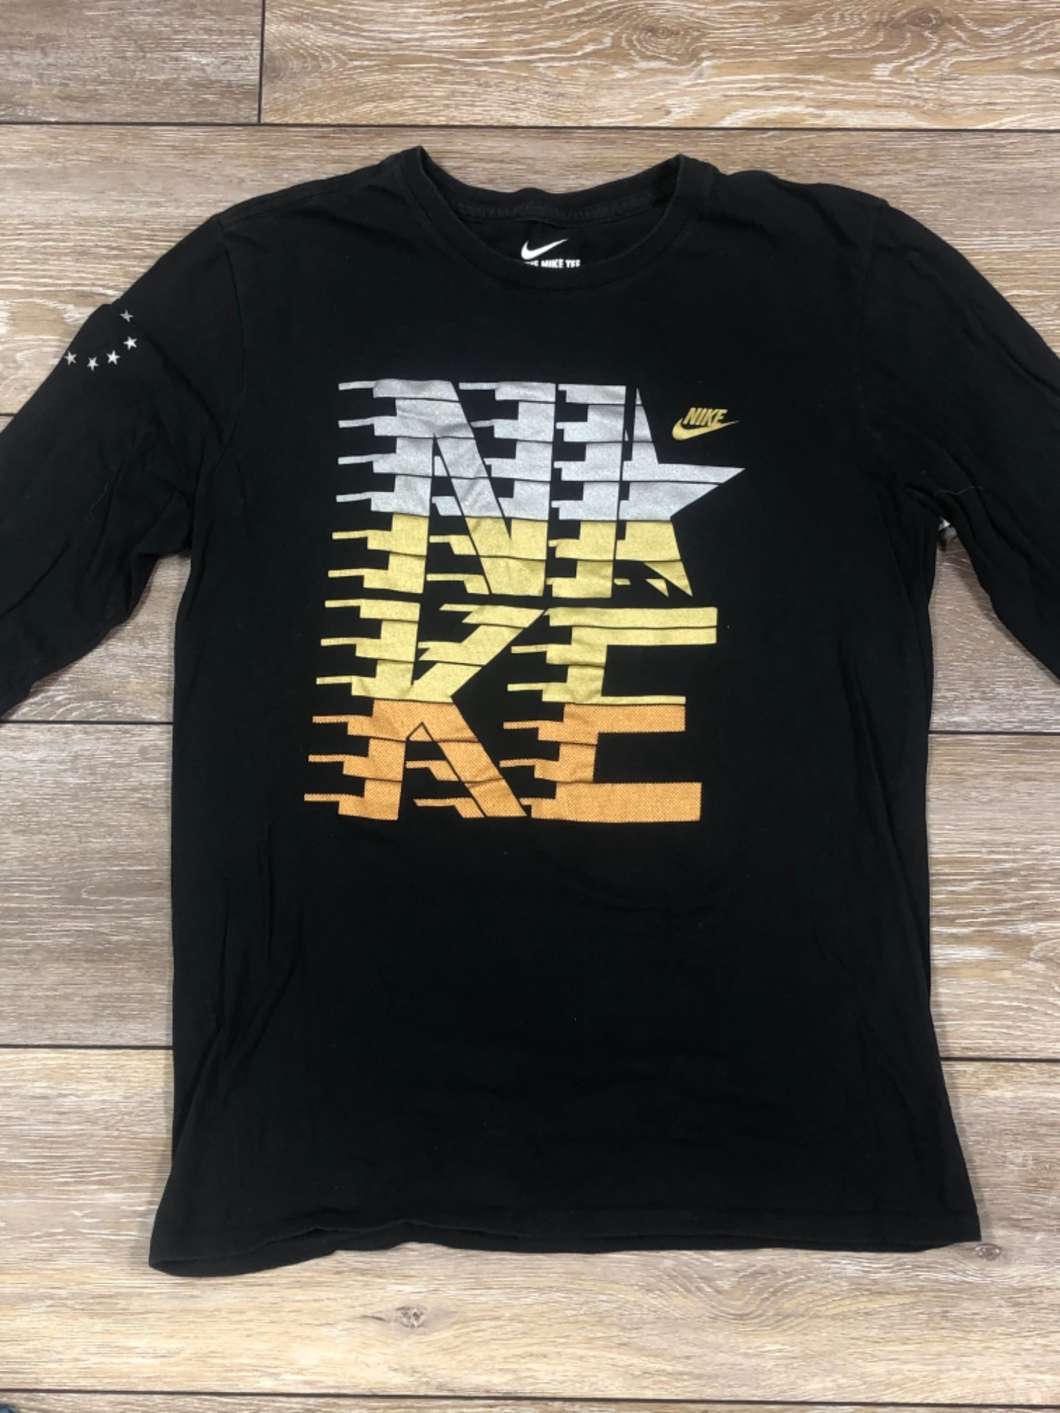 Nike Long Sleeve T-Shirt Size Medium